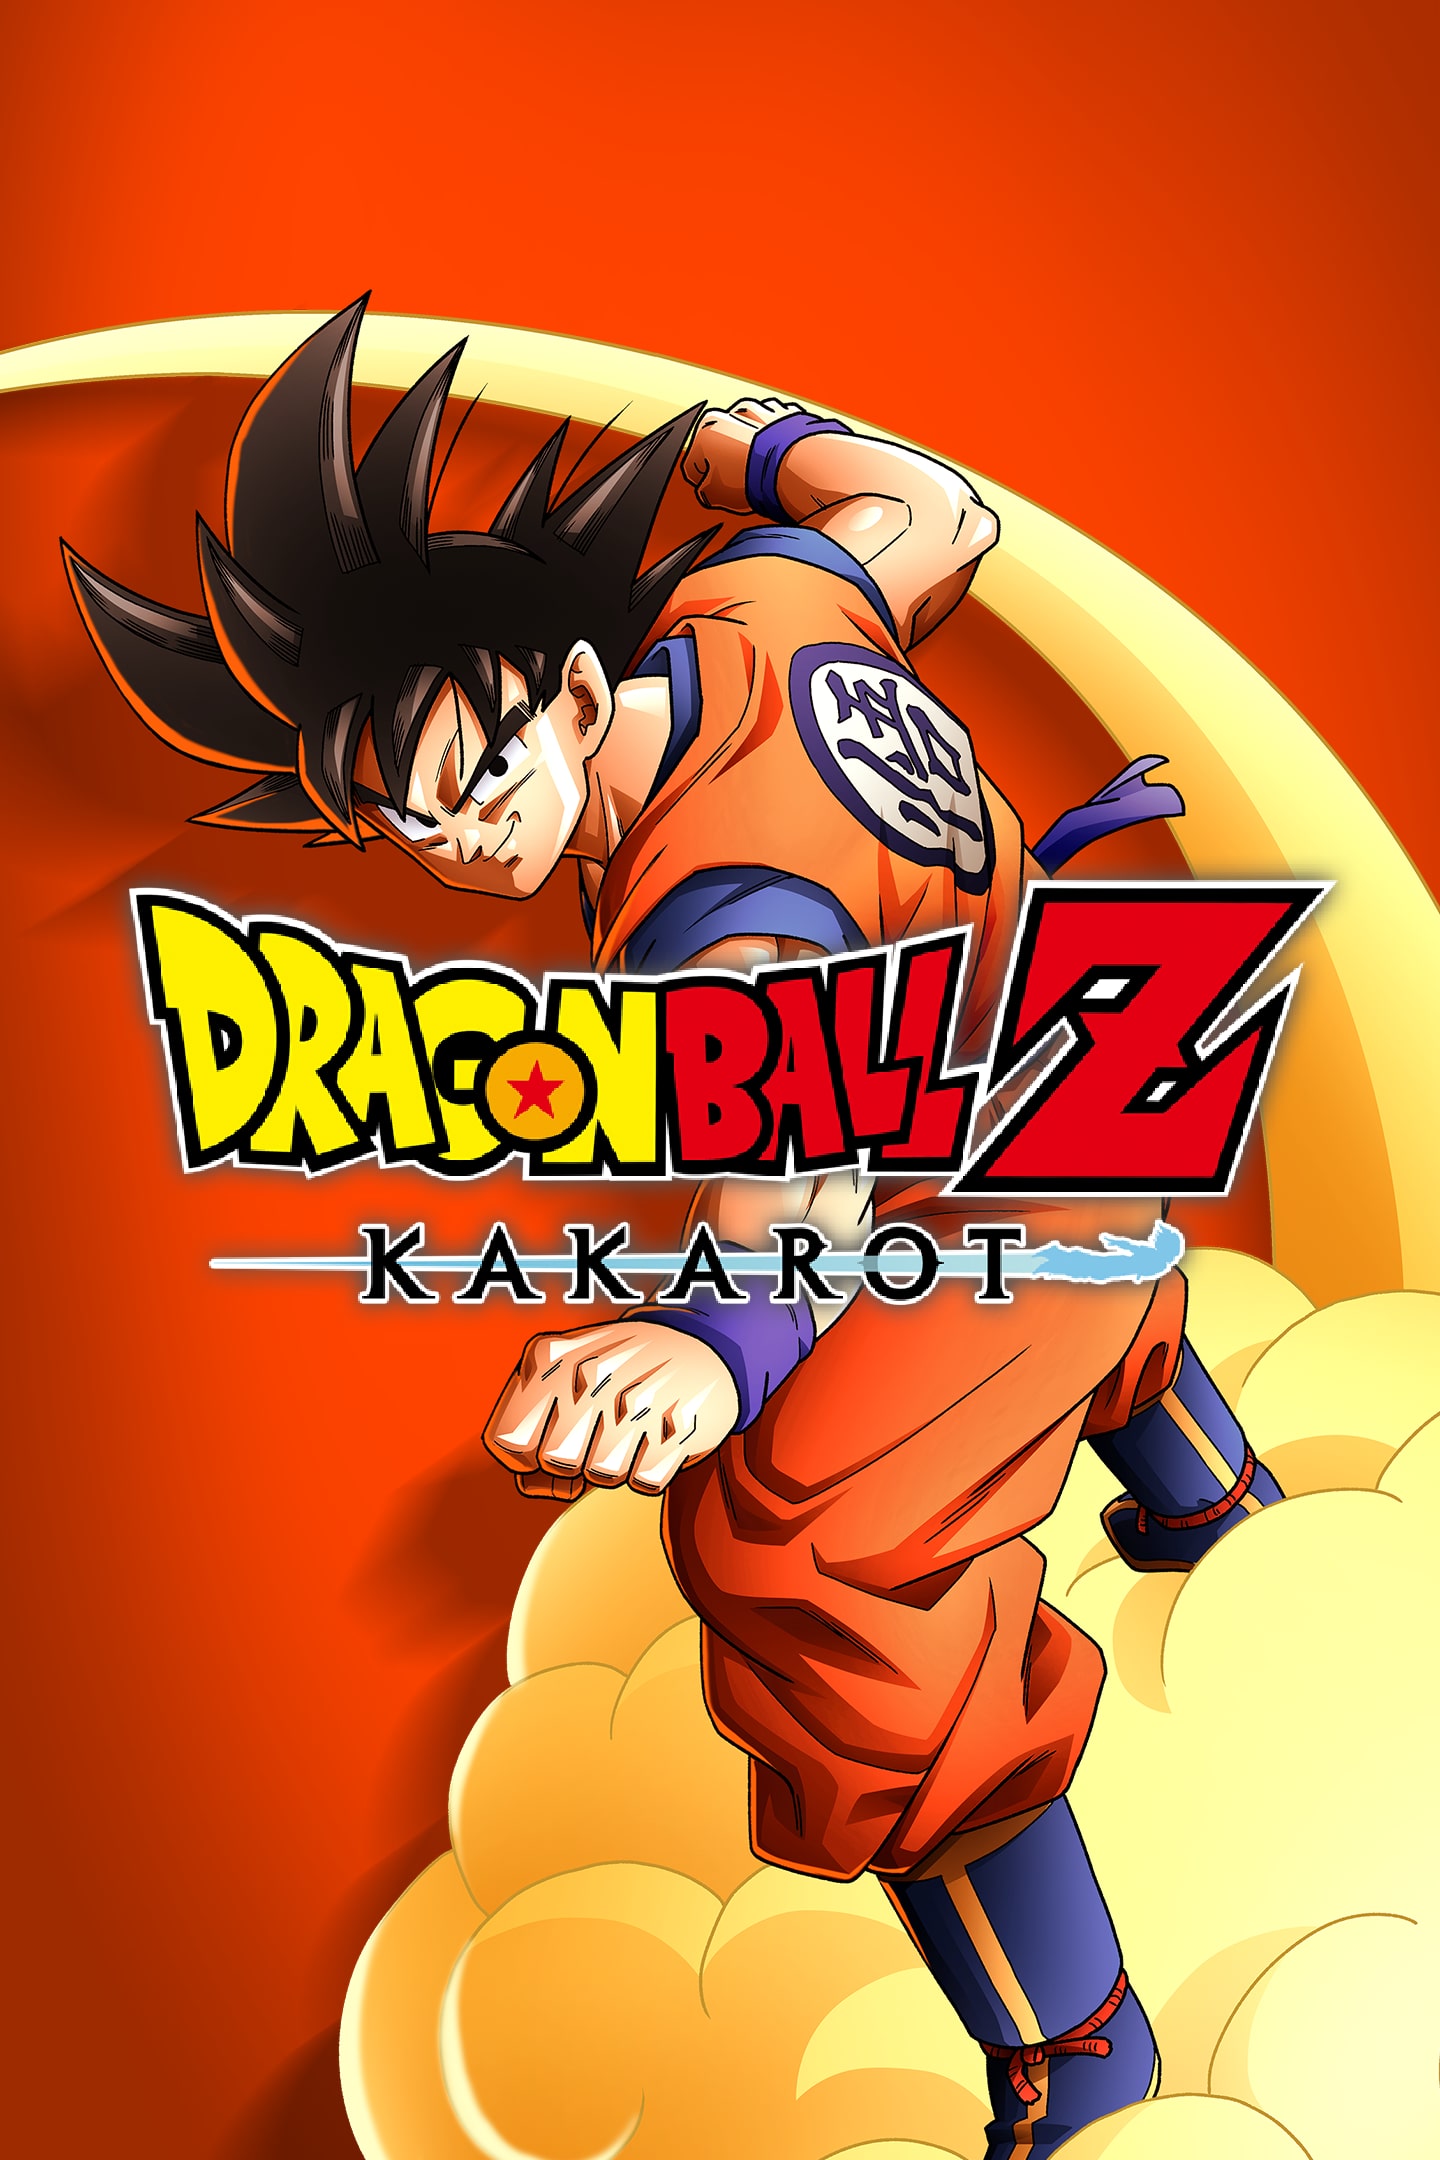 Dragon Ball Z: Kakarot - PlayStation 5 : : Games e